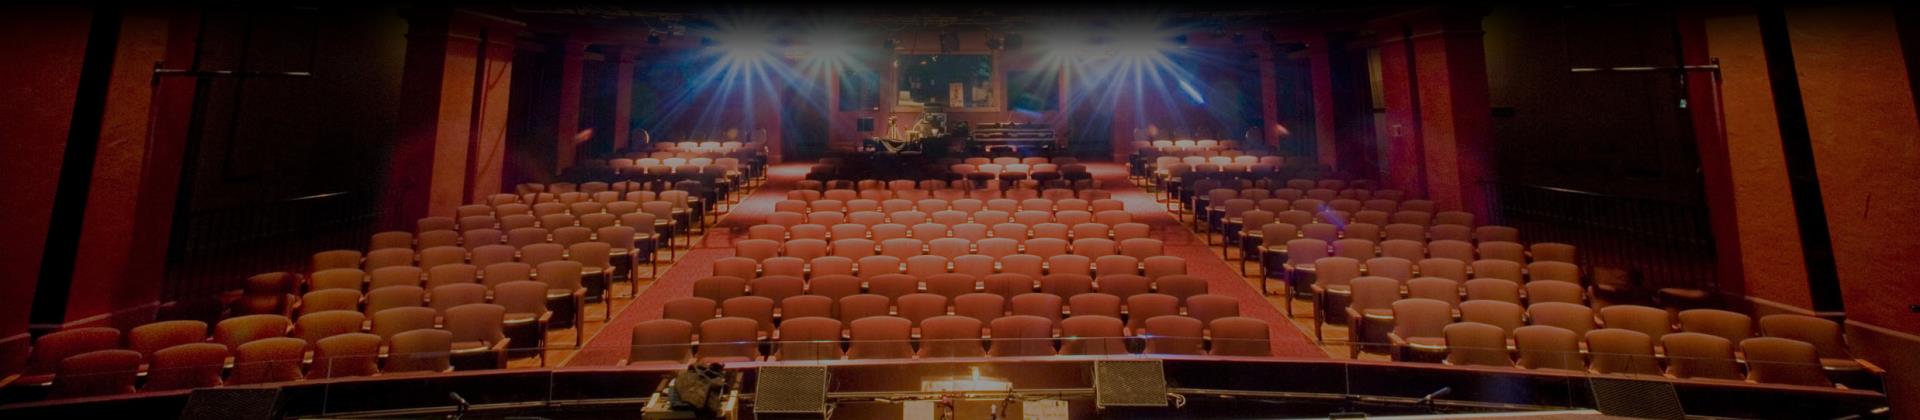 Montgomery Theater San Jose Seating Chart